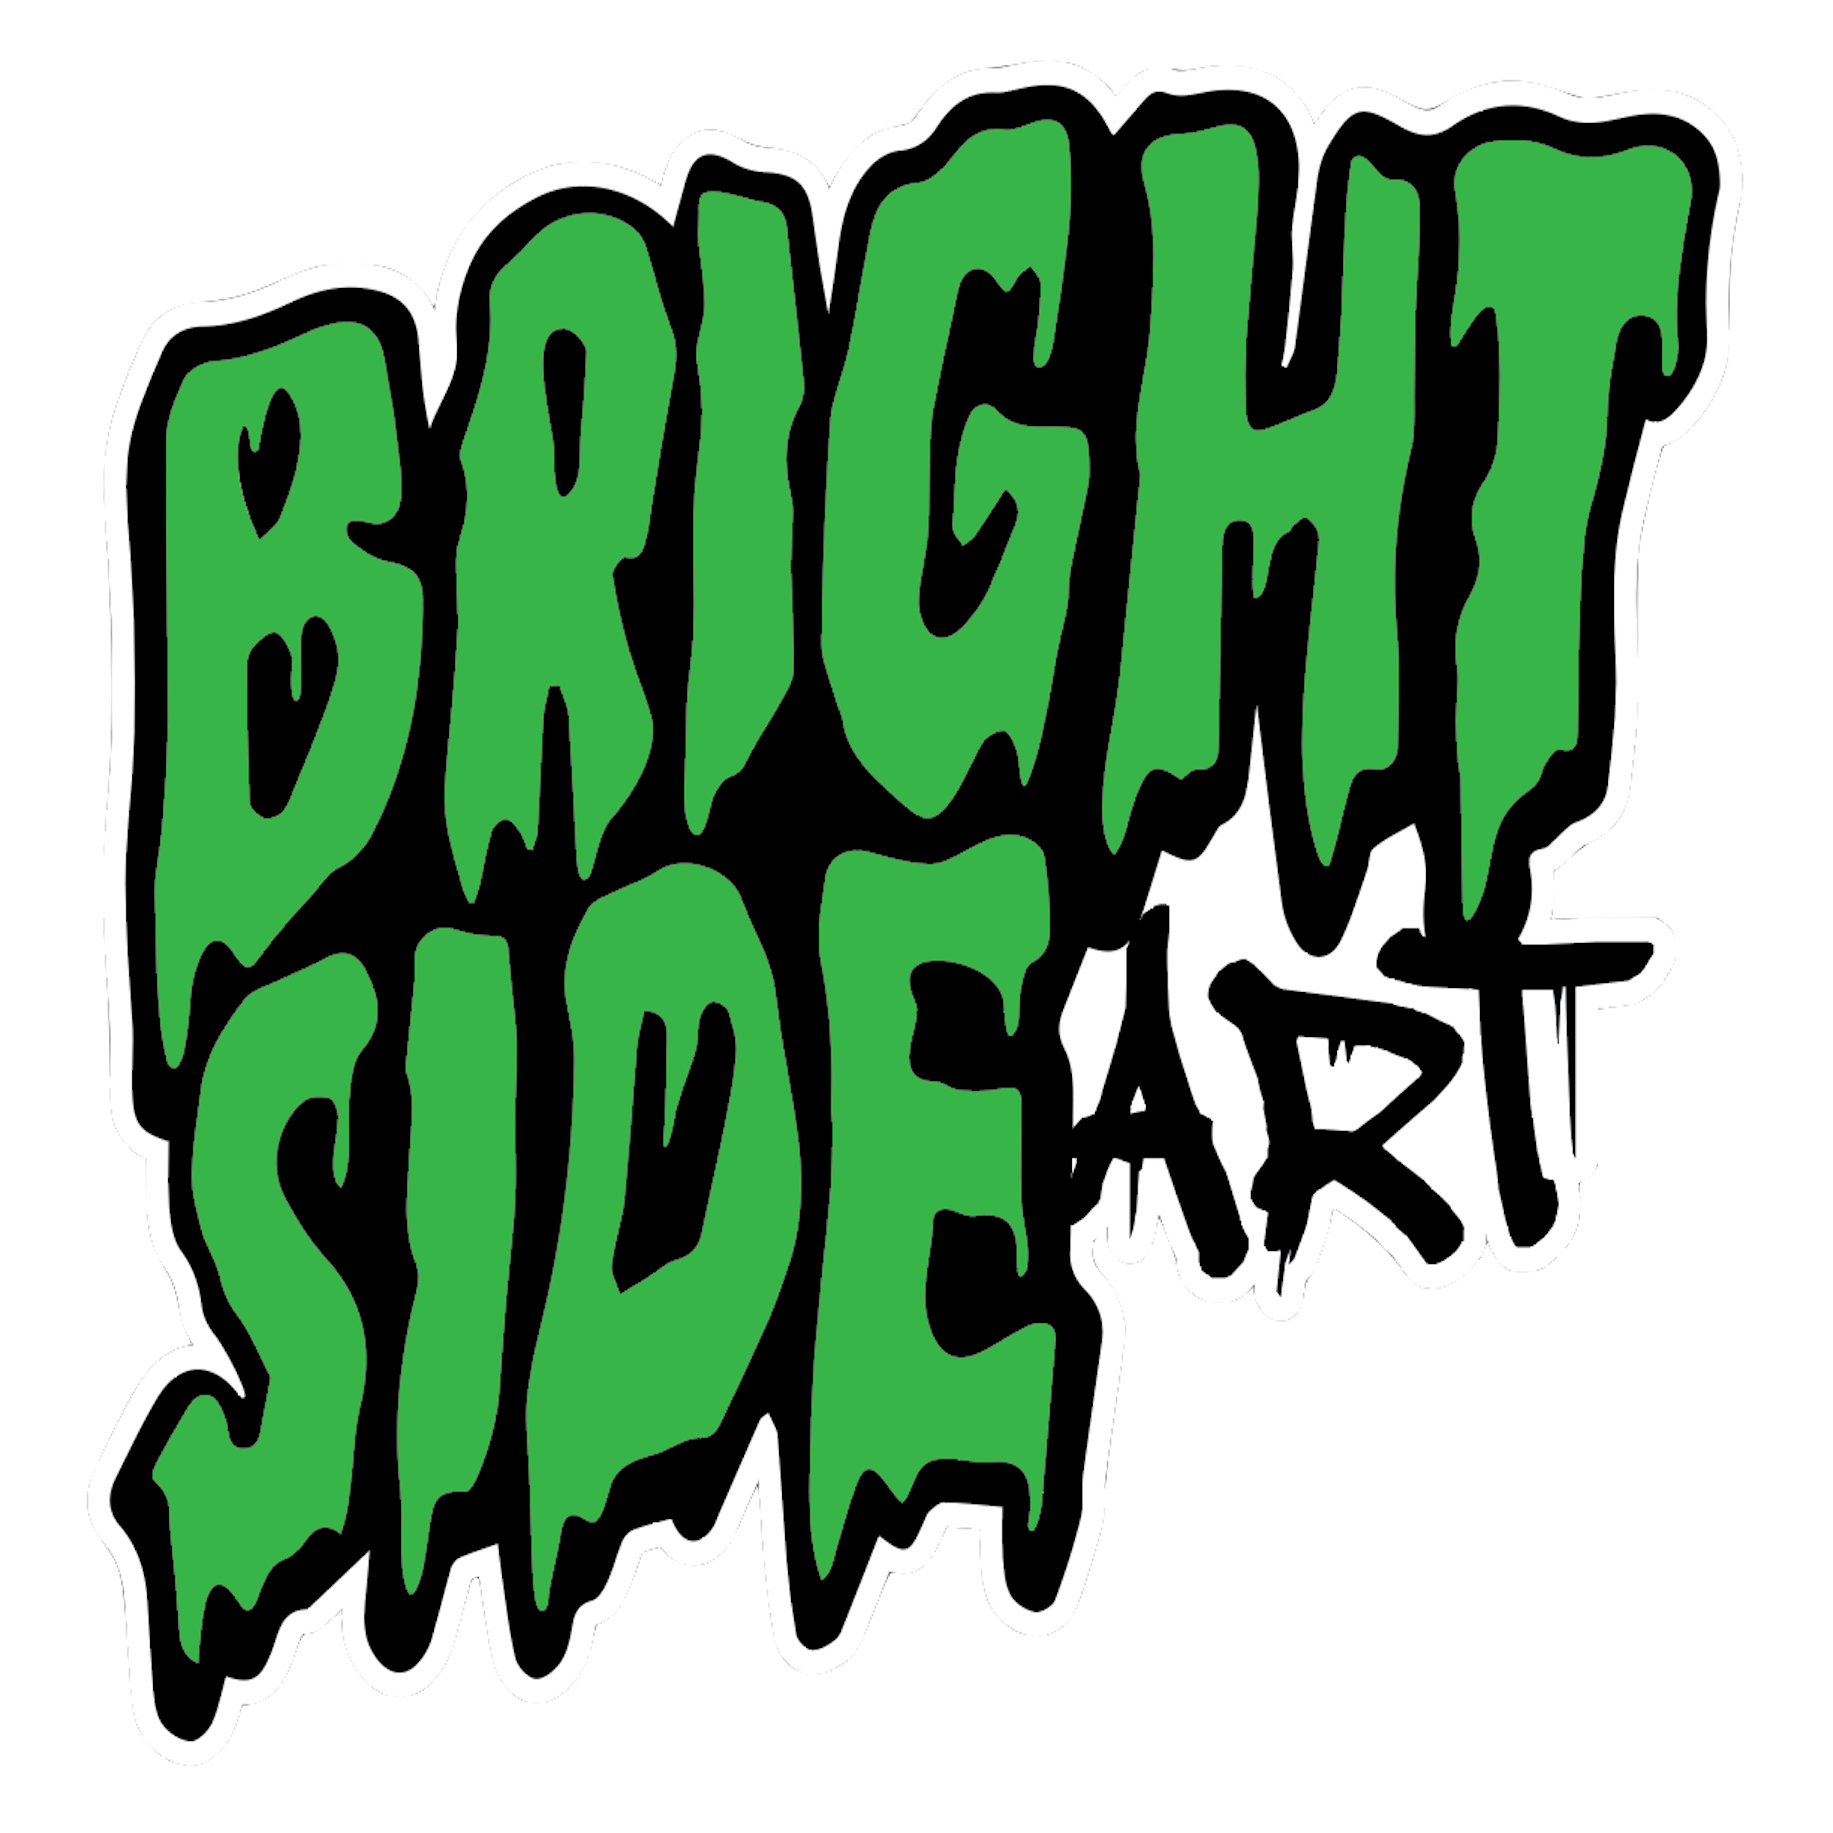 BrightSide "HAVE A RAD DAY" Sticker Set